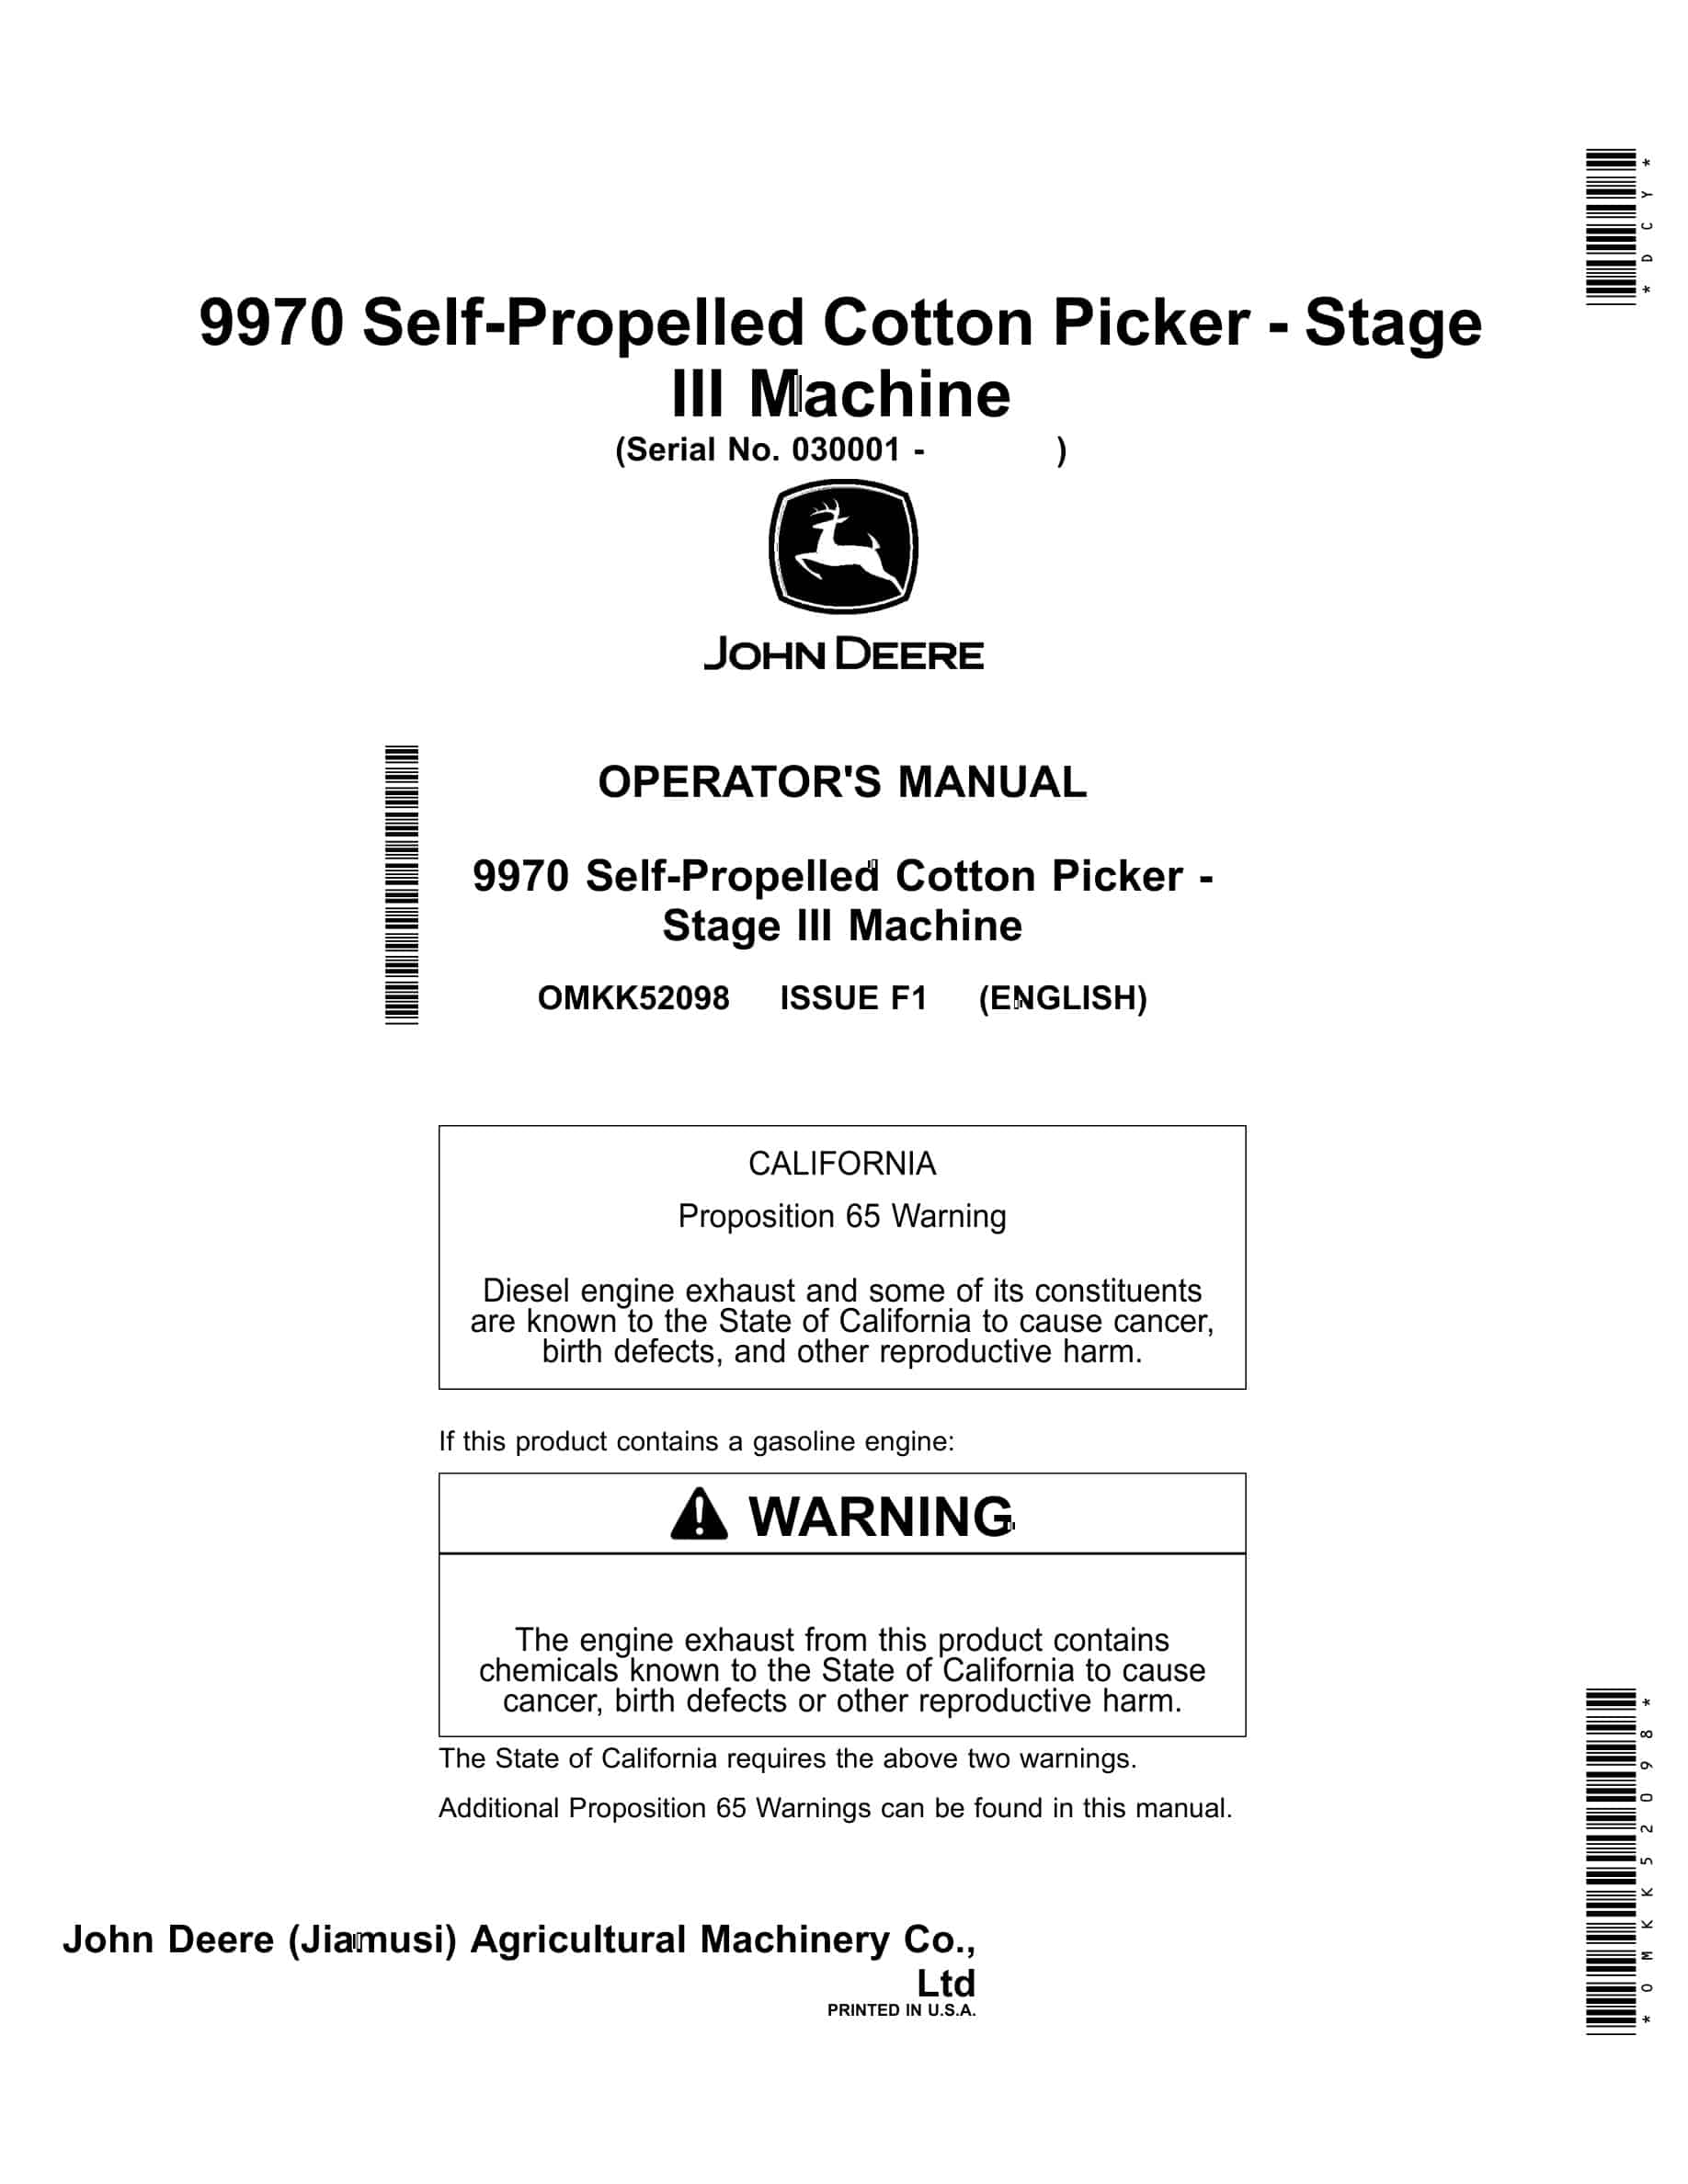 John Deere 9970 Self-propelled Cotton Picker Stage III Machine Operator Manual OMKK52098-1